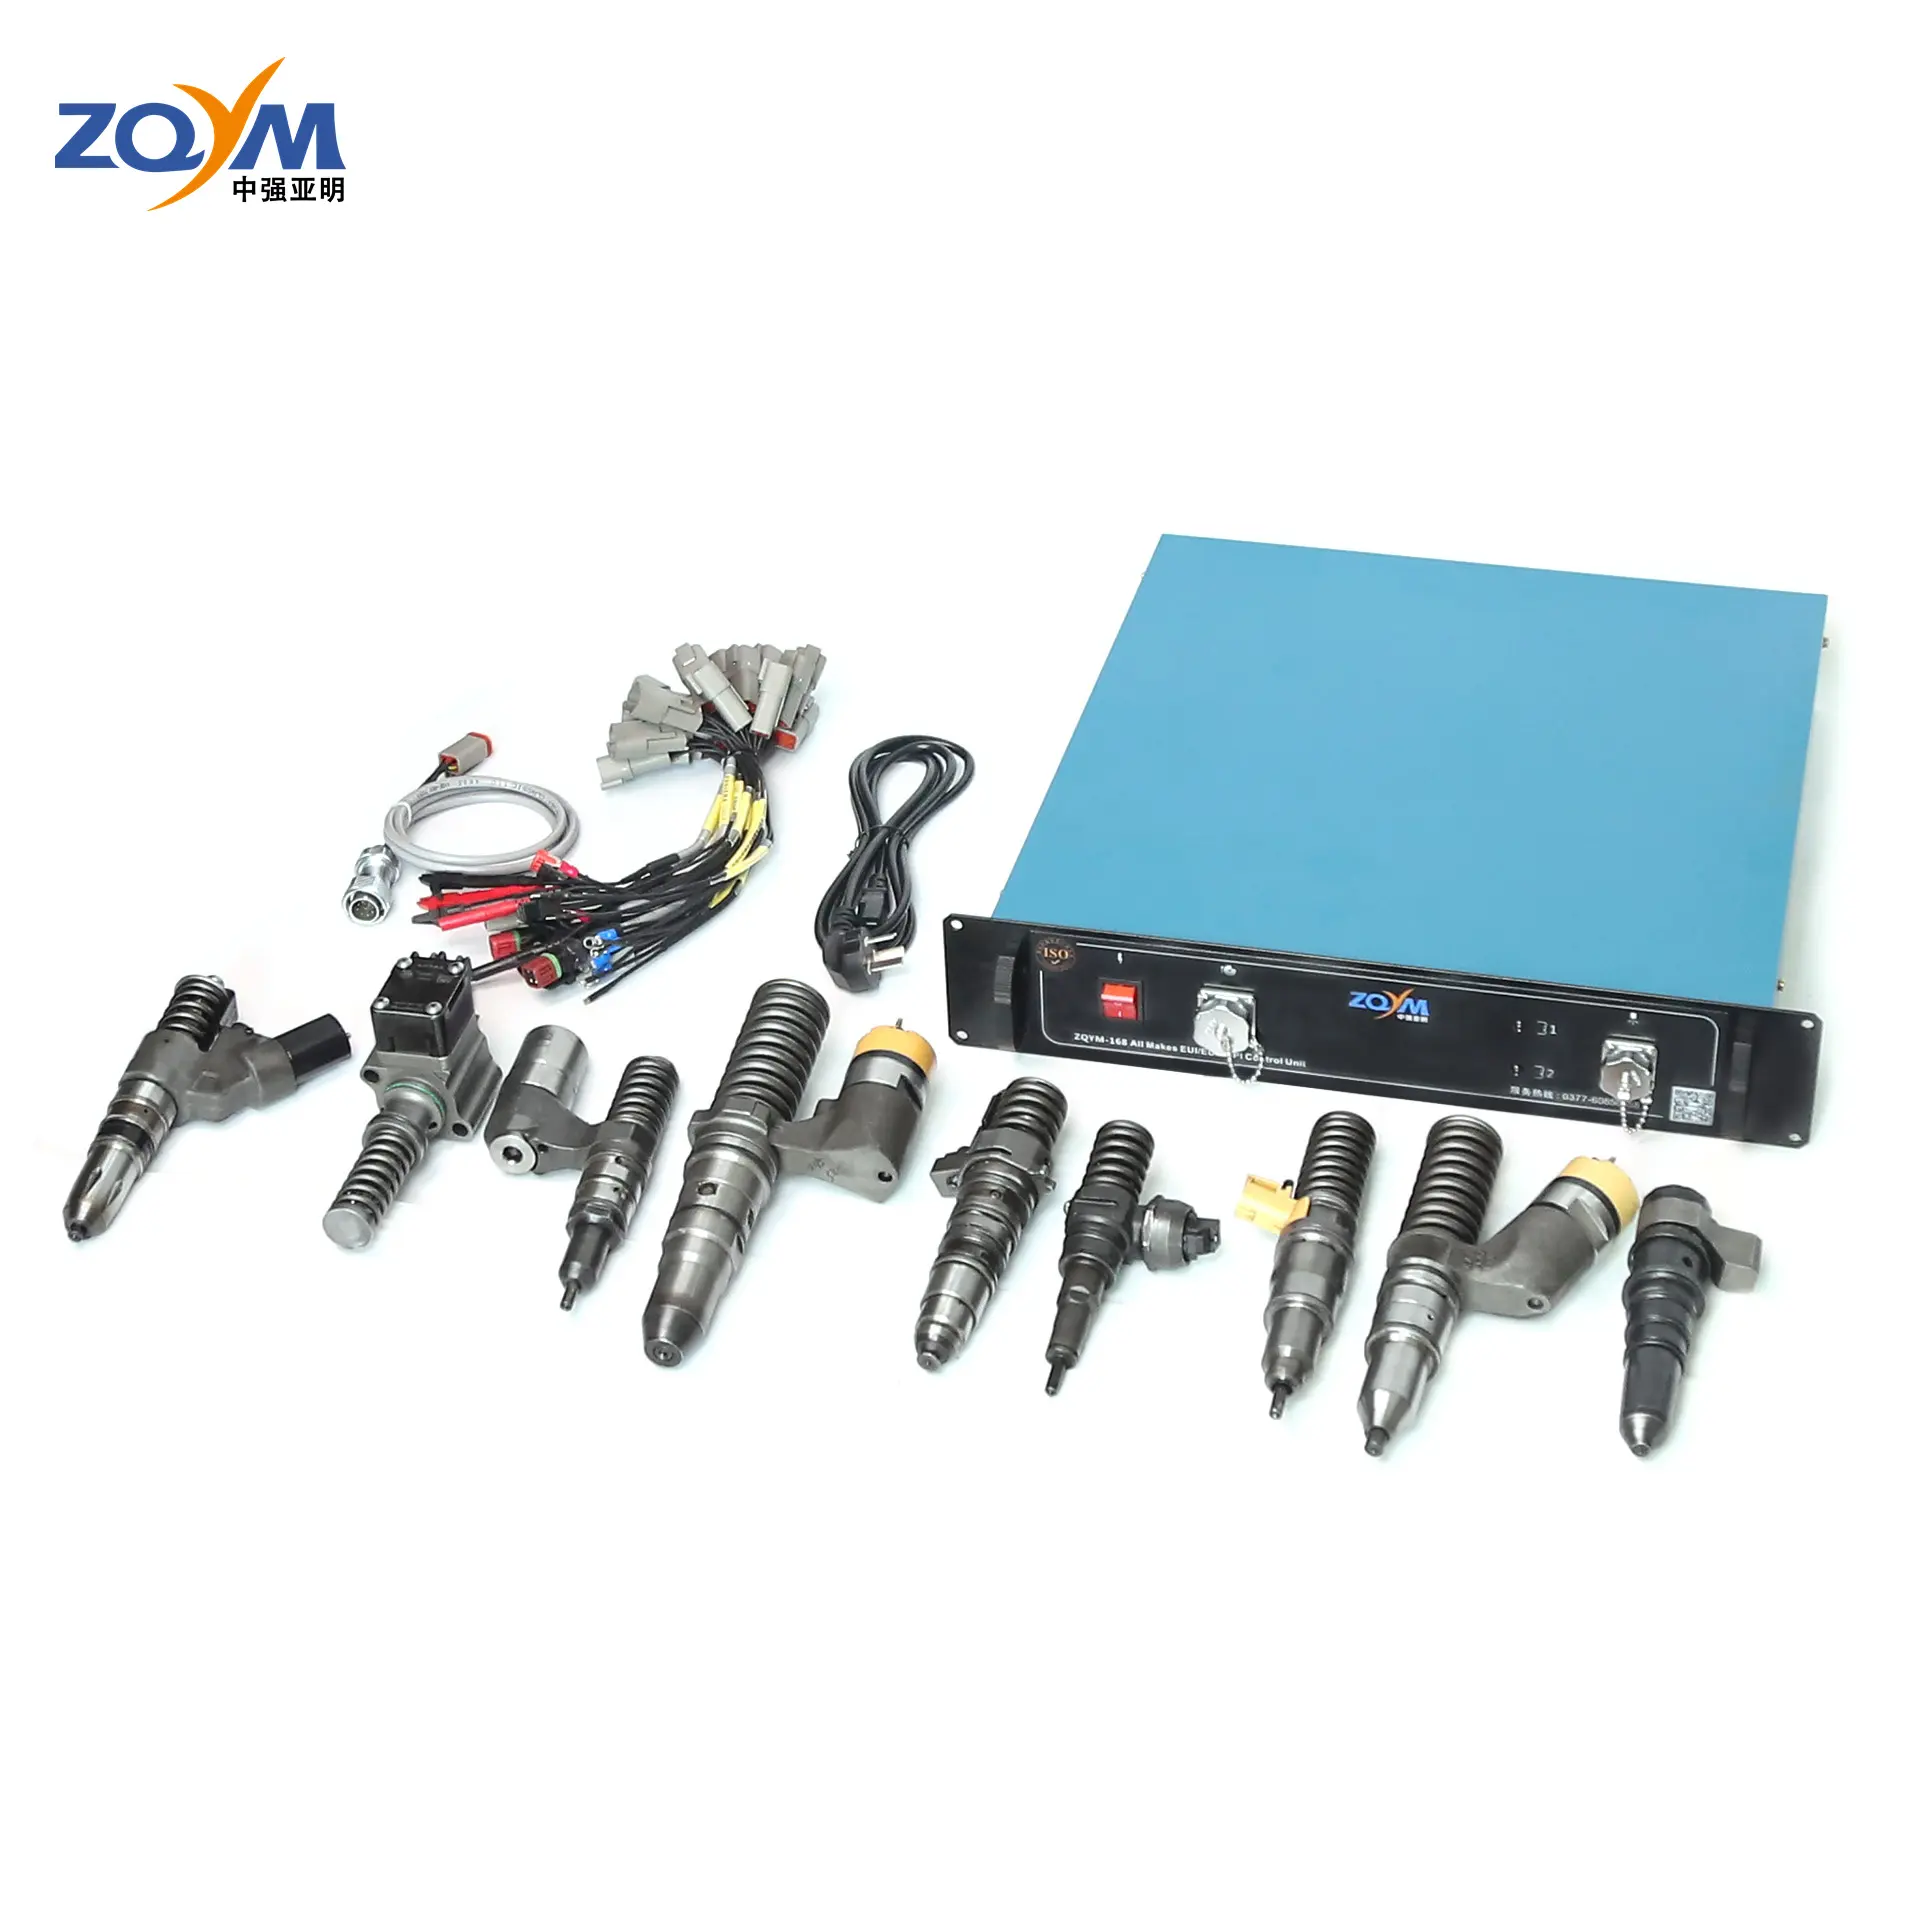 ZQYM Factory Direct 1400 diesel Cam Box eueup I tester eui/eup unit инжекторный насос eui tester Cambox diesel с адаптерами